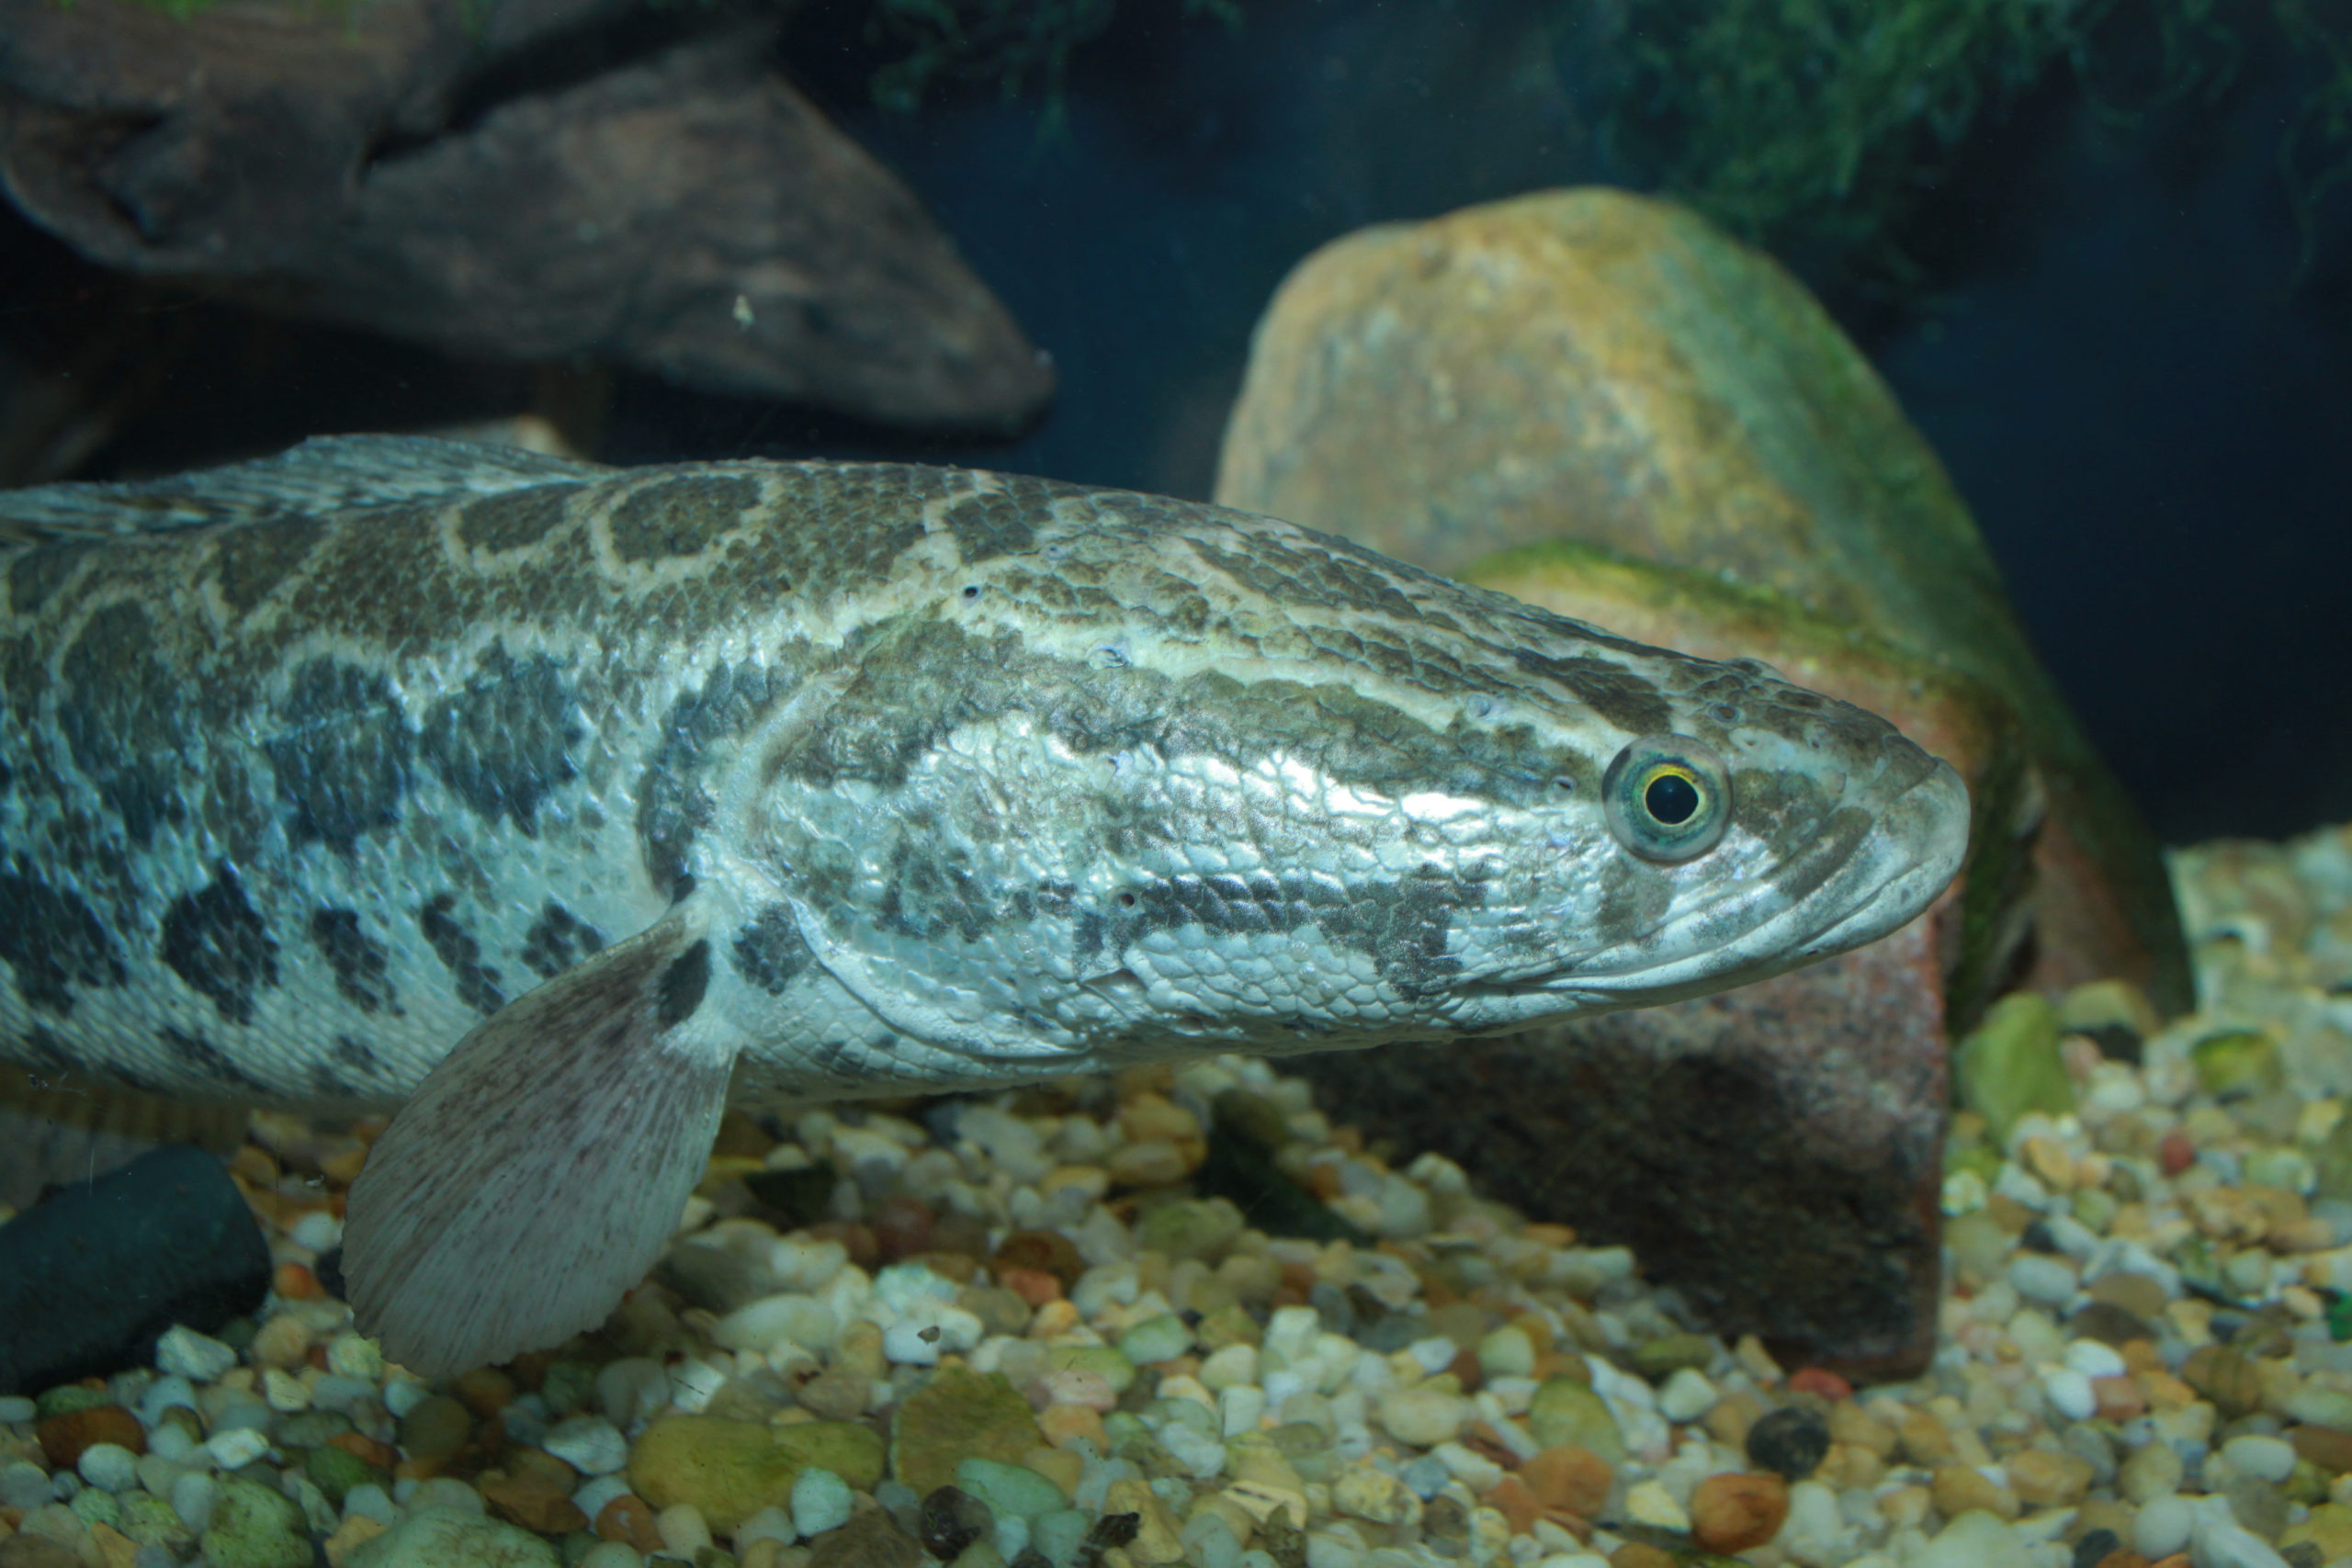 Northern snakehead invasive species fish